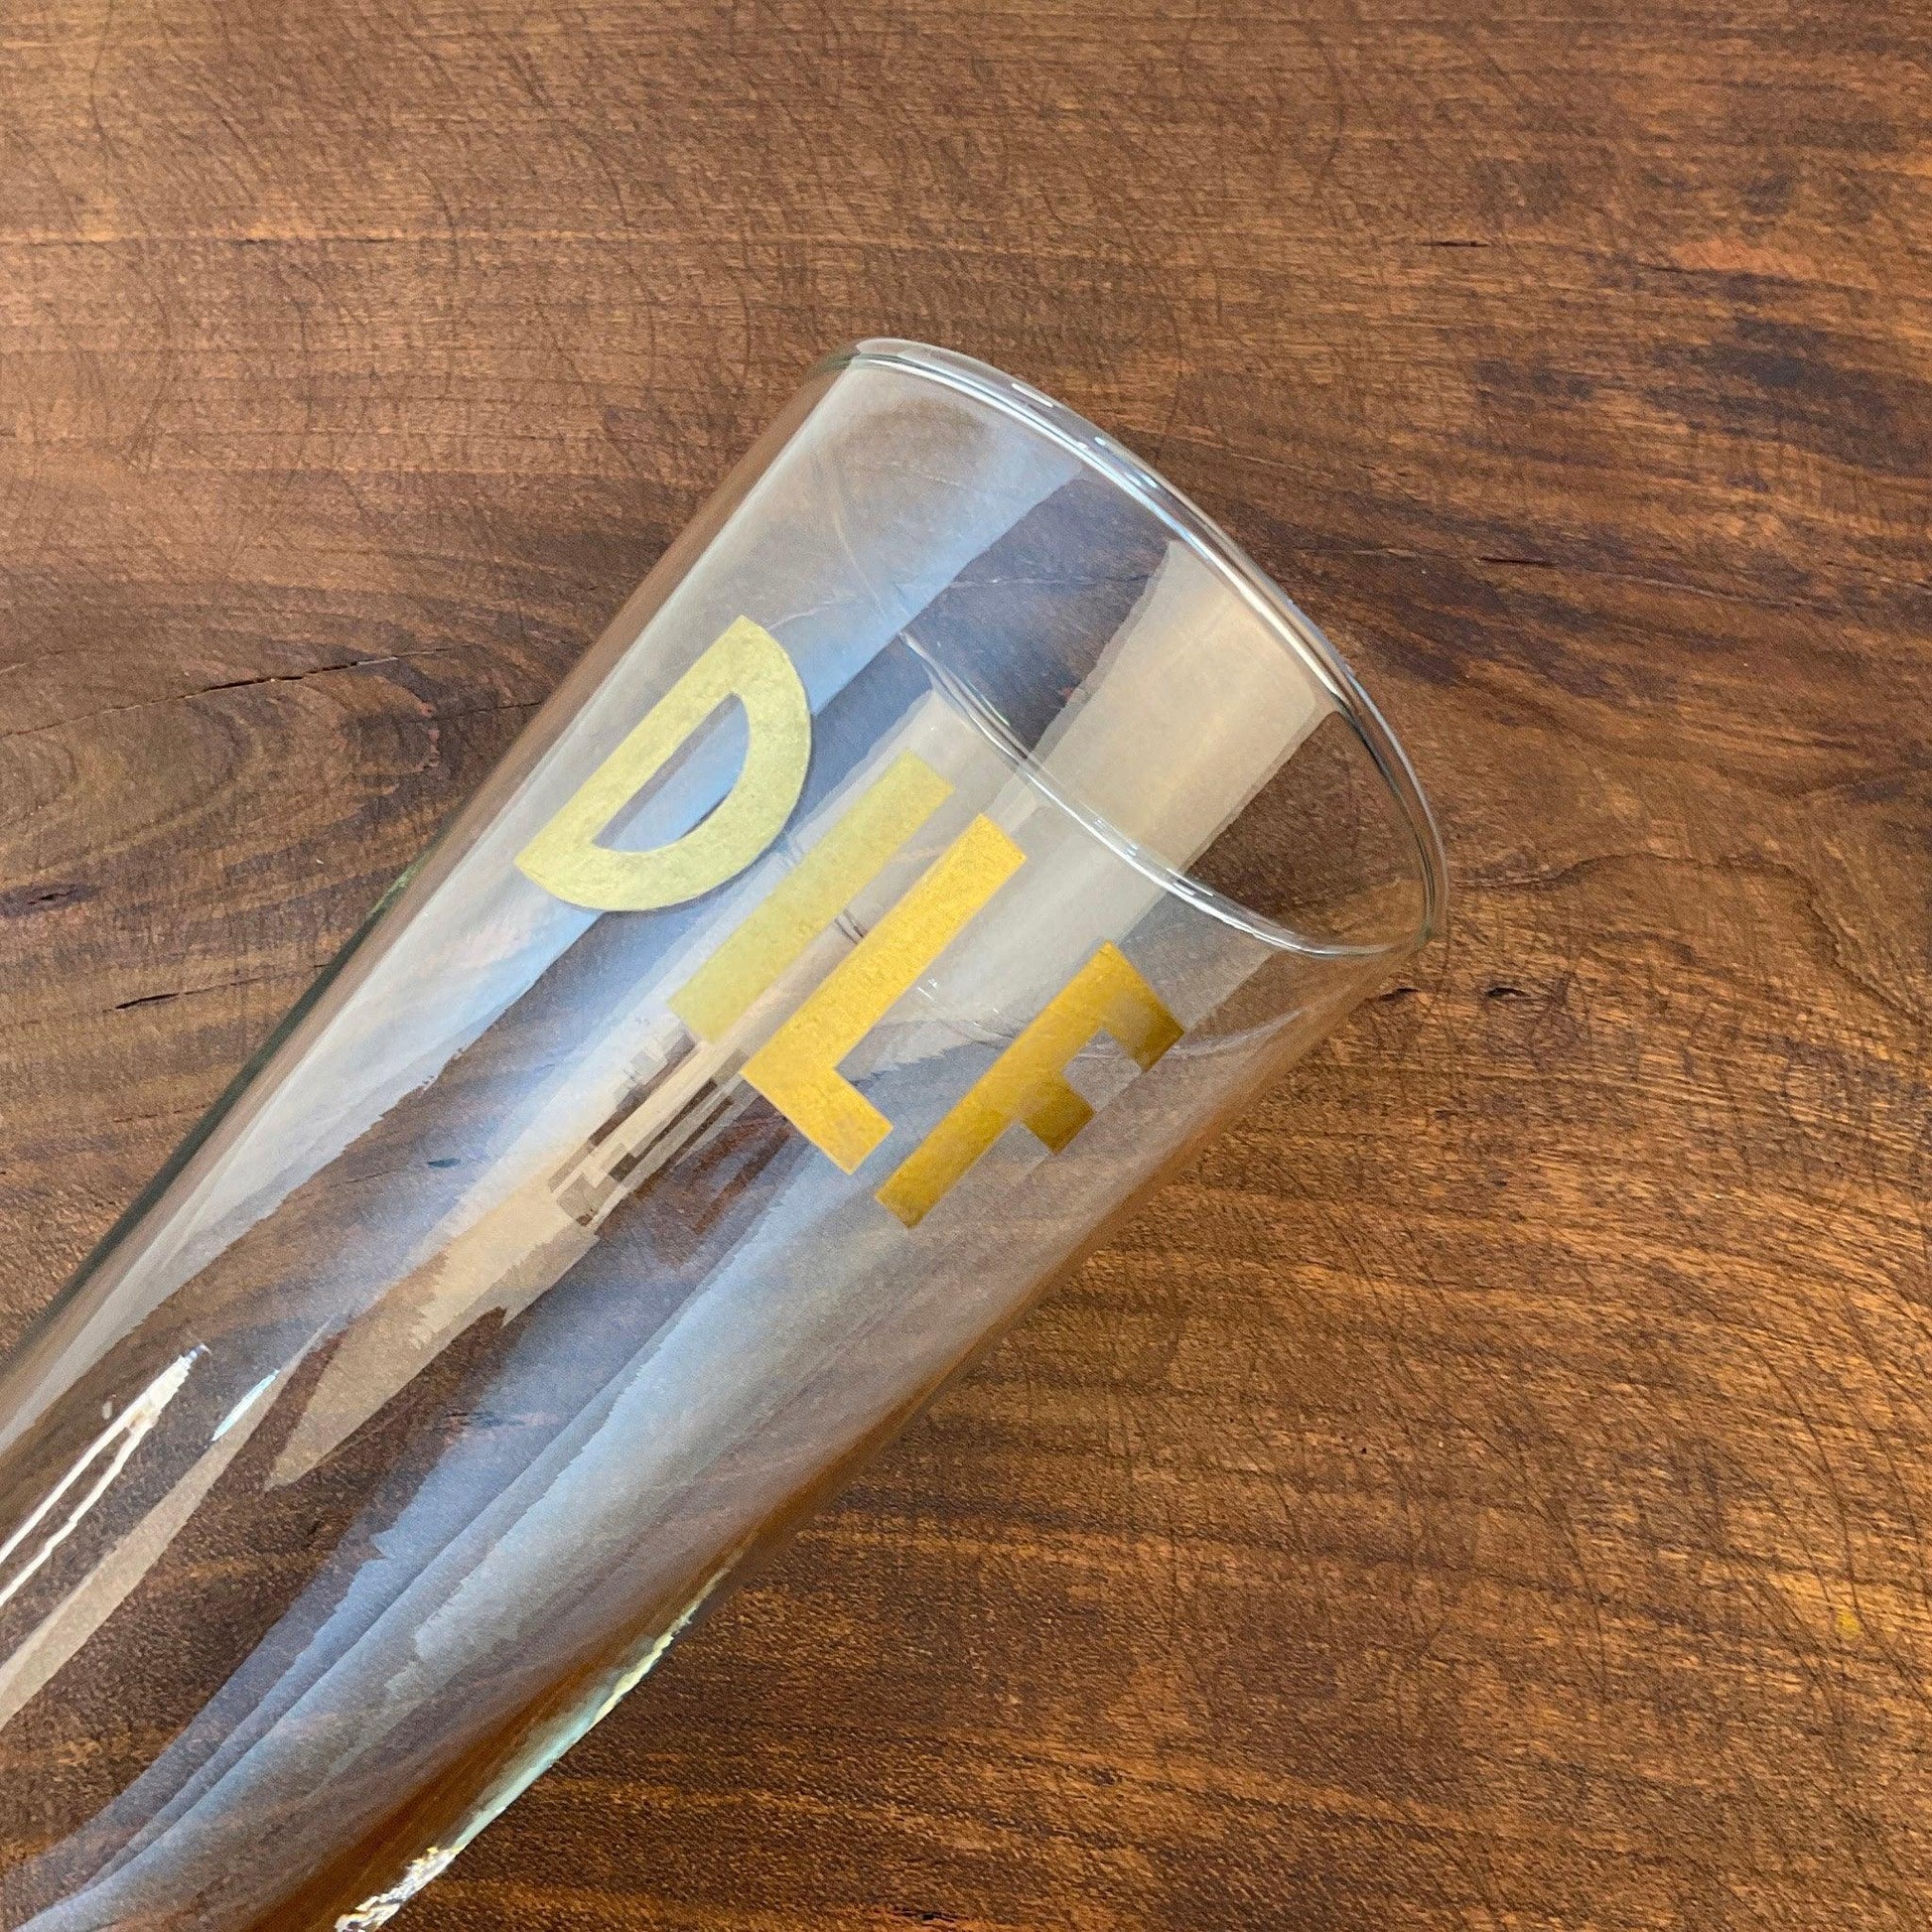 DILF Stemmed Pilsner Glass - Offensively Domestic